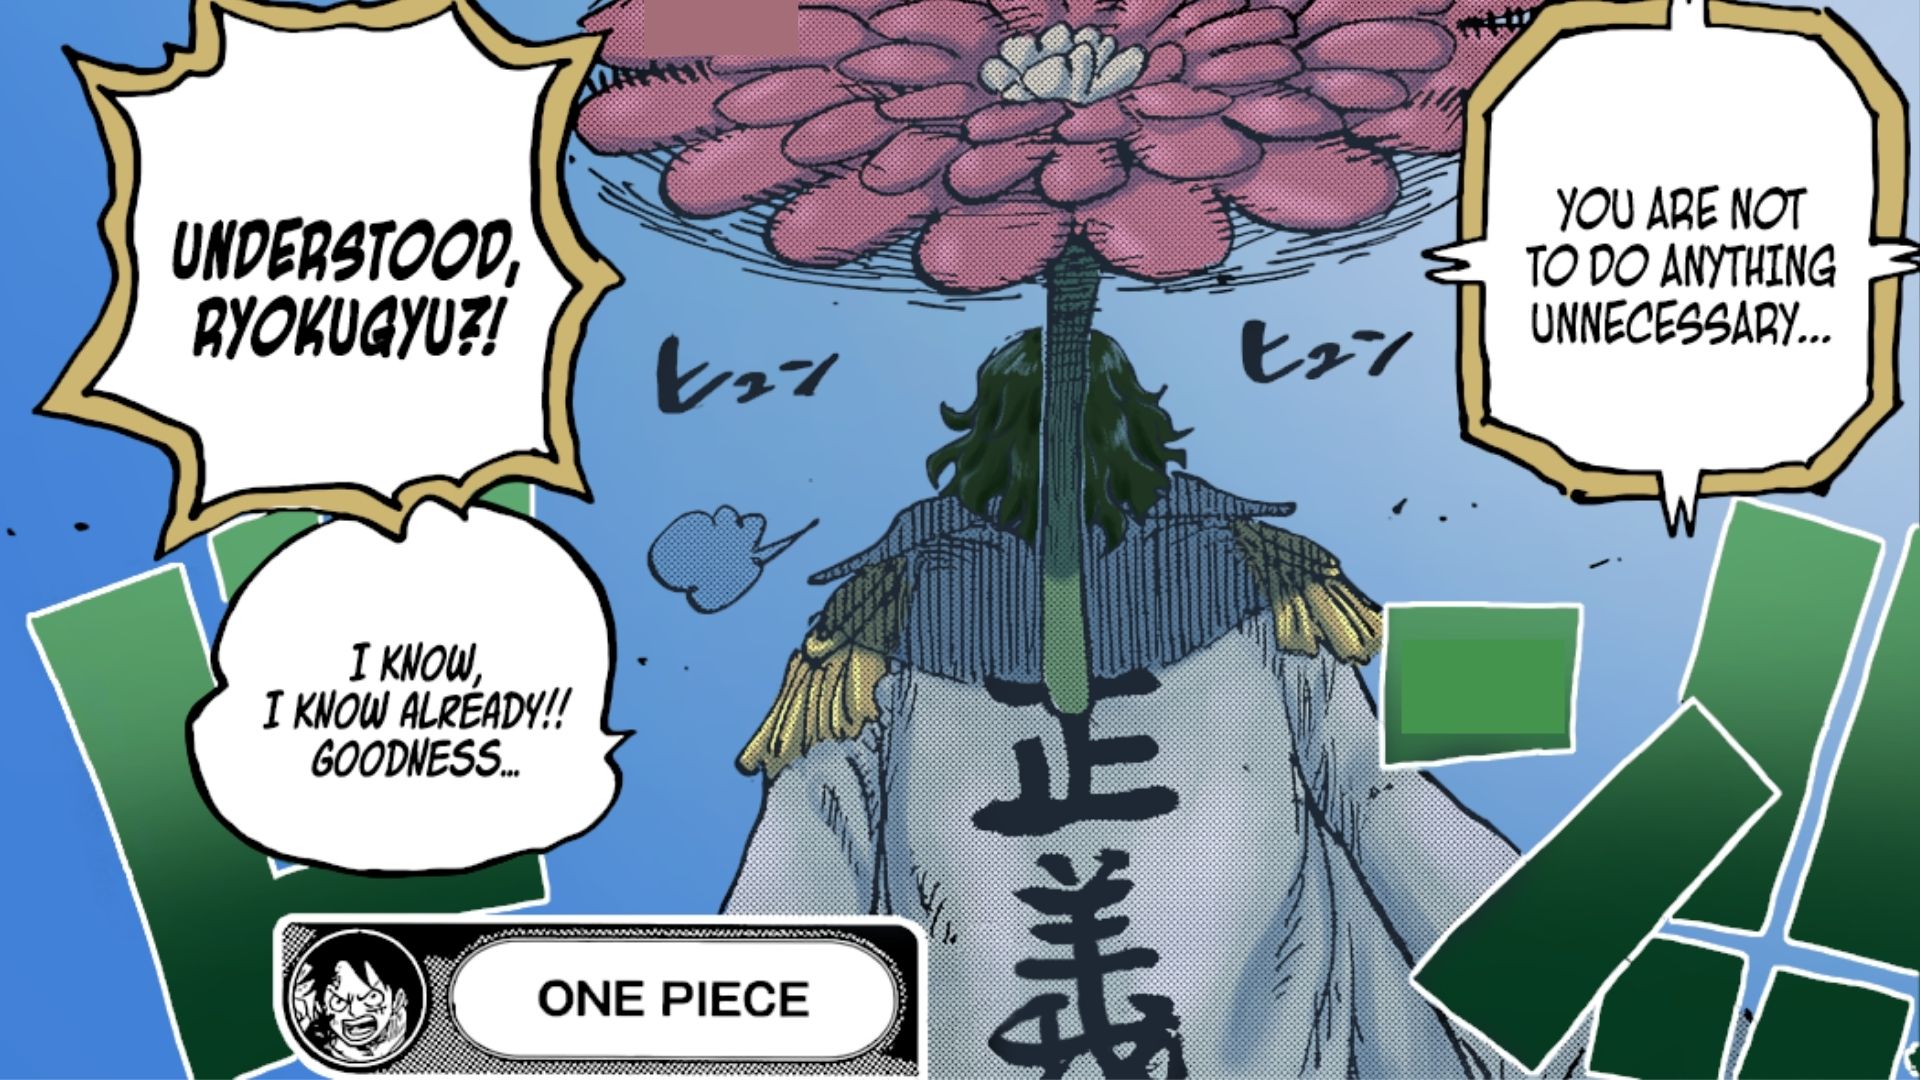 Admiral Ryokogyu - One Piece Chapter 1052 Raw scan